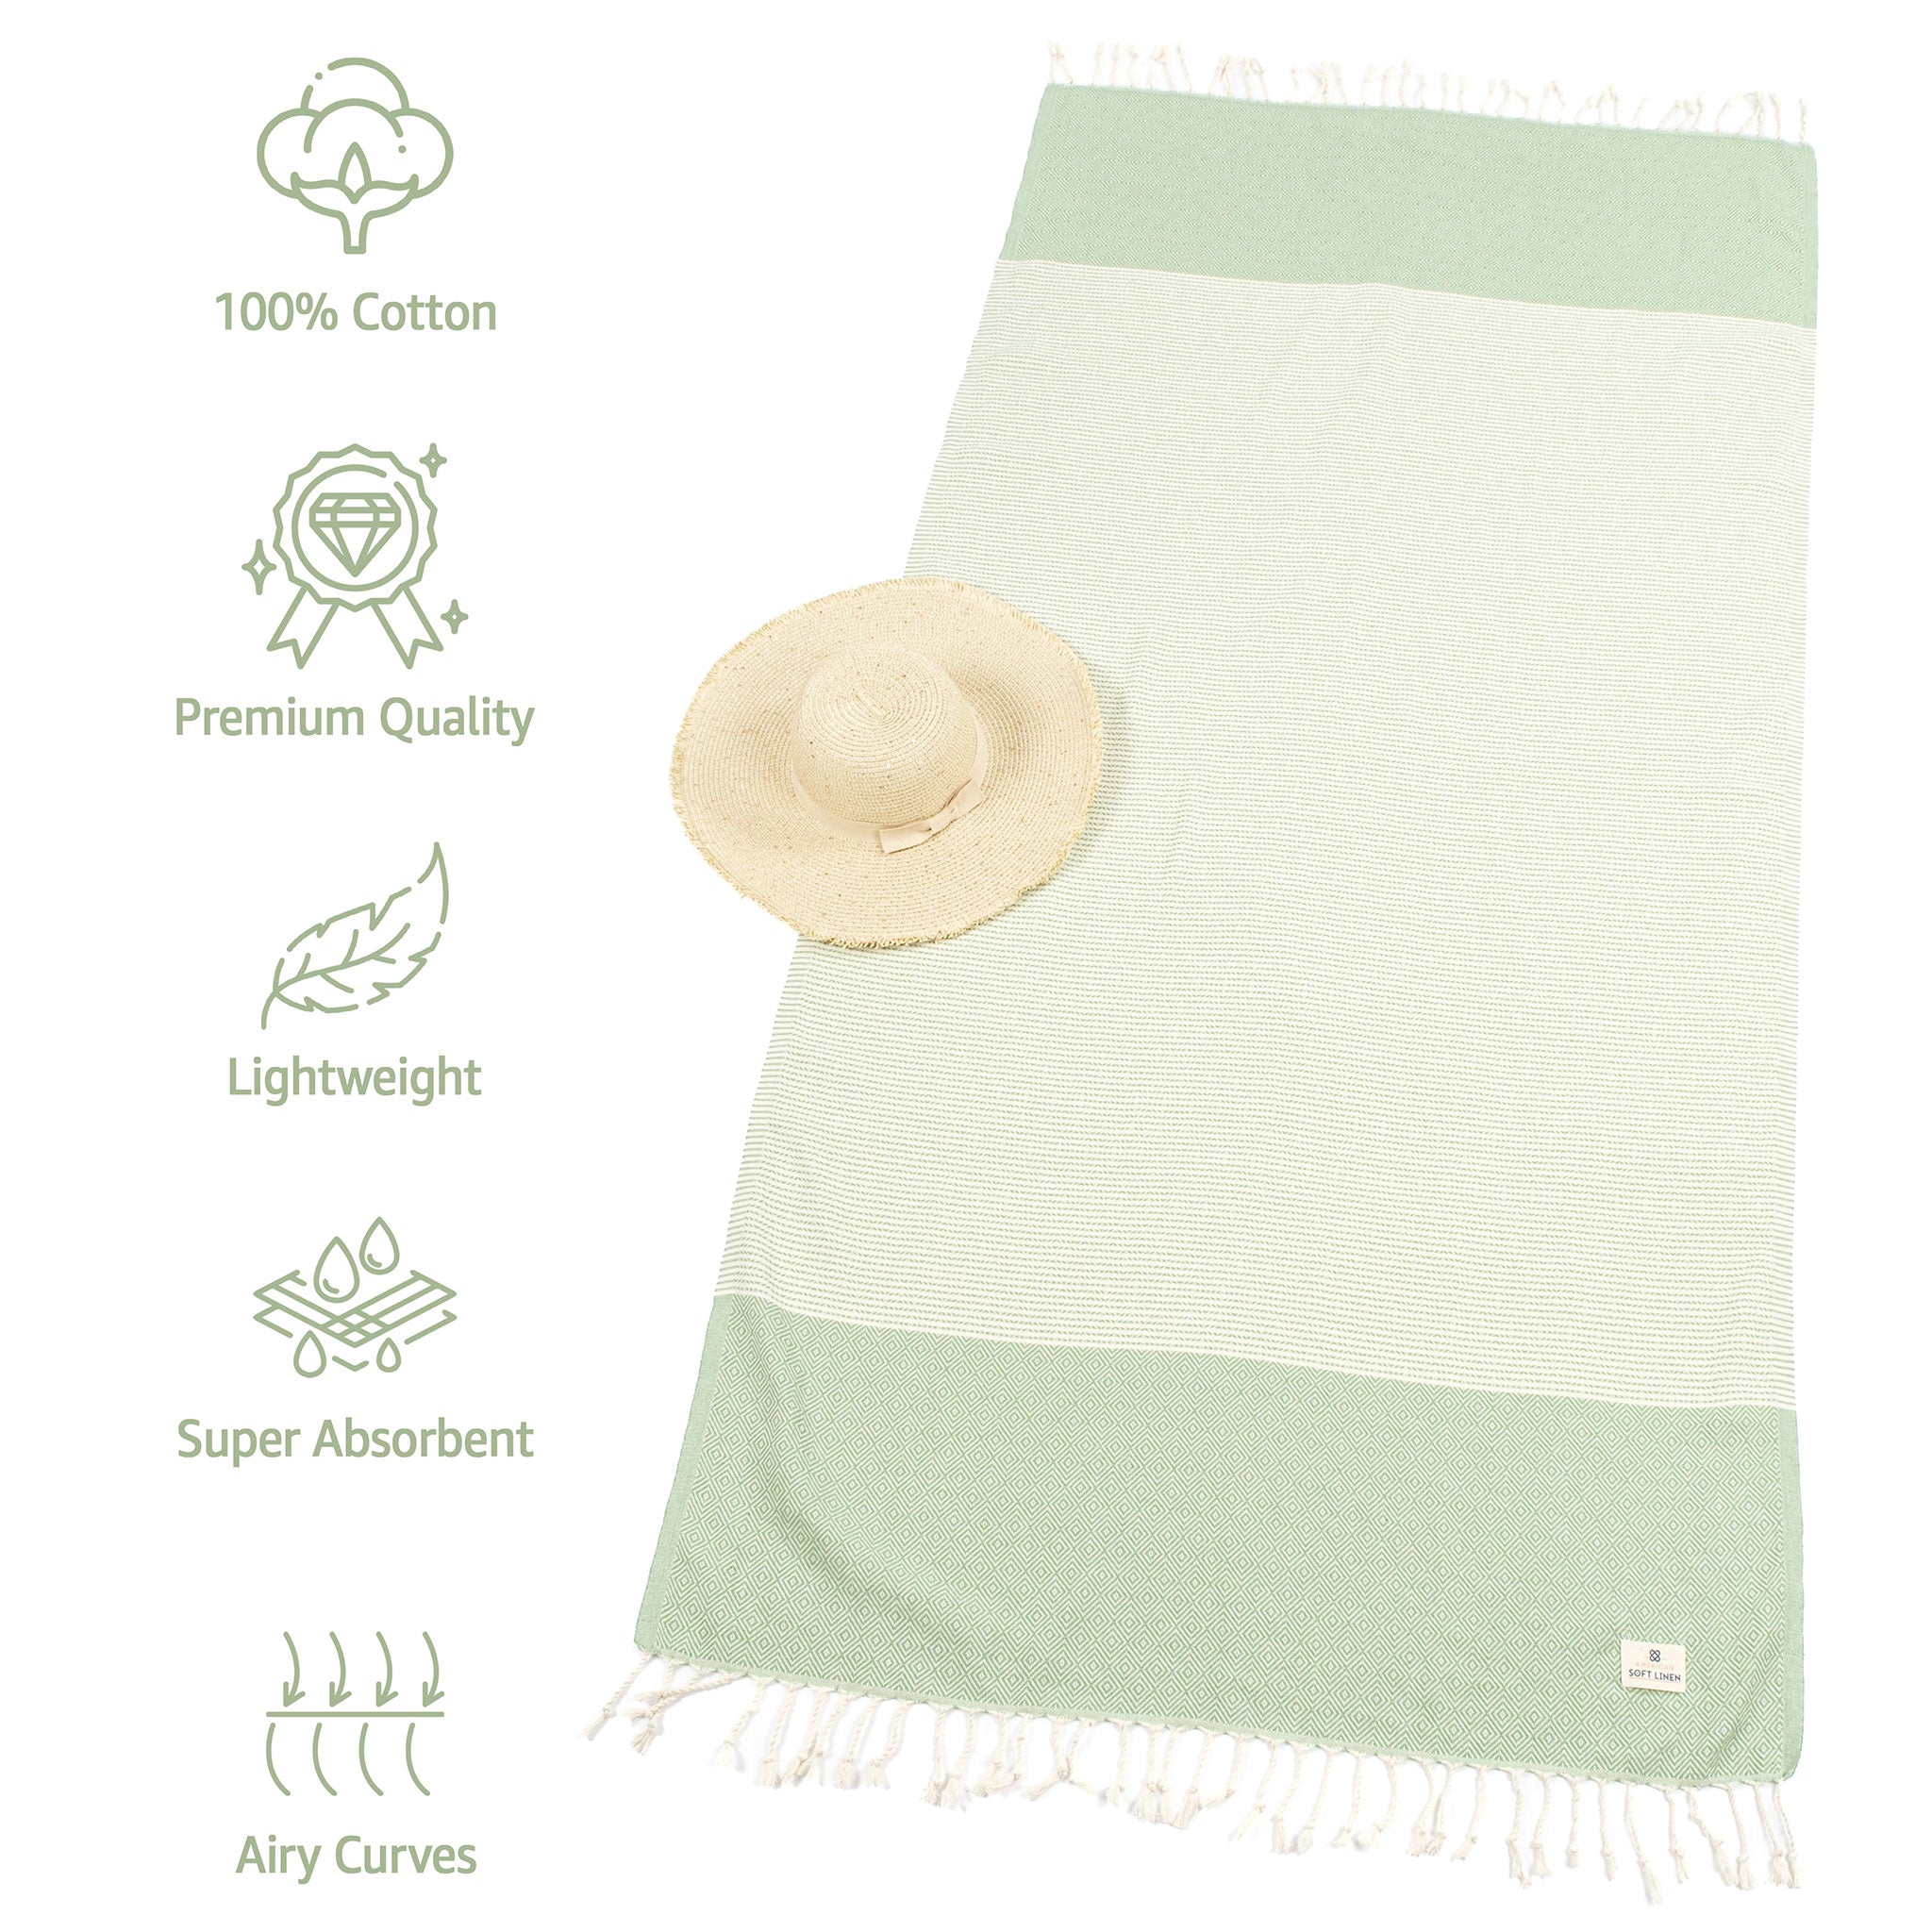 American Soft Linen - 100% Cotton Turkish Peshtemal Towels 40x70 Inches - Green - 3